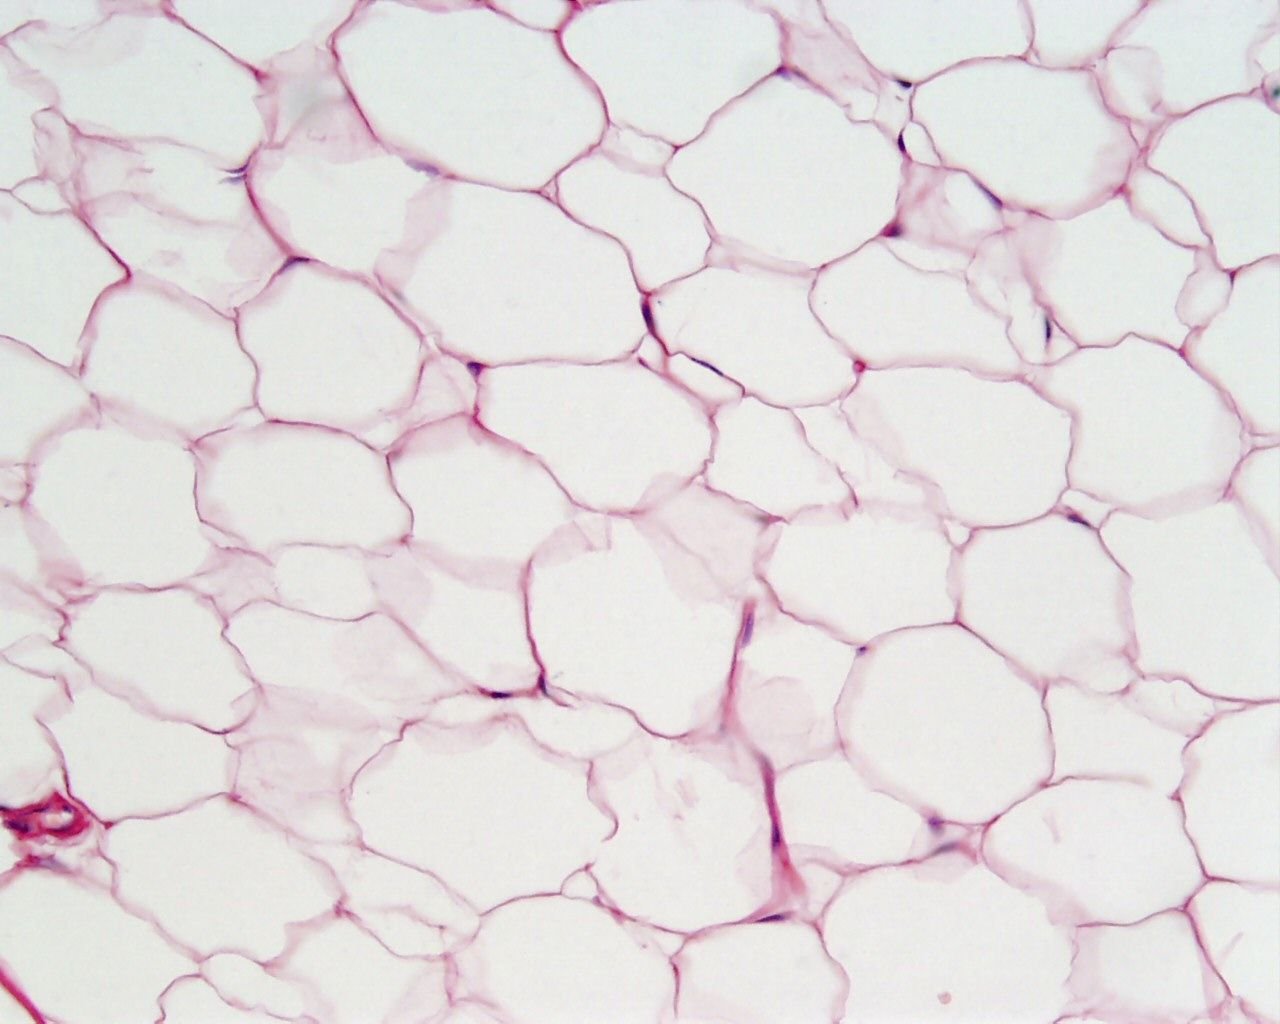 Жировая ткань латынь. Жировая ткань ткань гистология. Белая жировая ткань под микроскопом. Жировая ткань гистология. Клетки жировой ткани гистология.